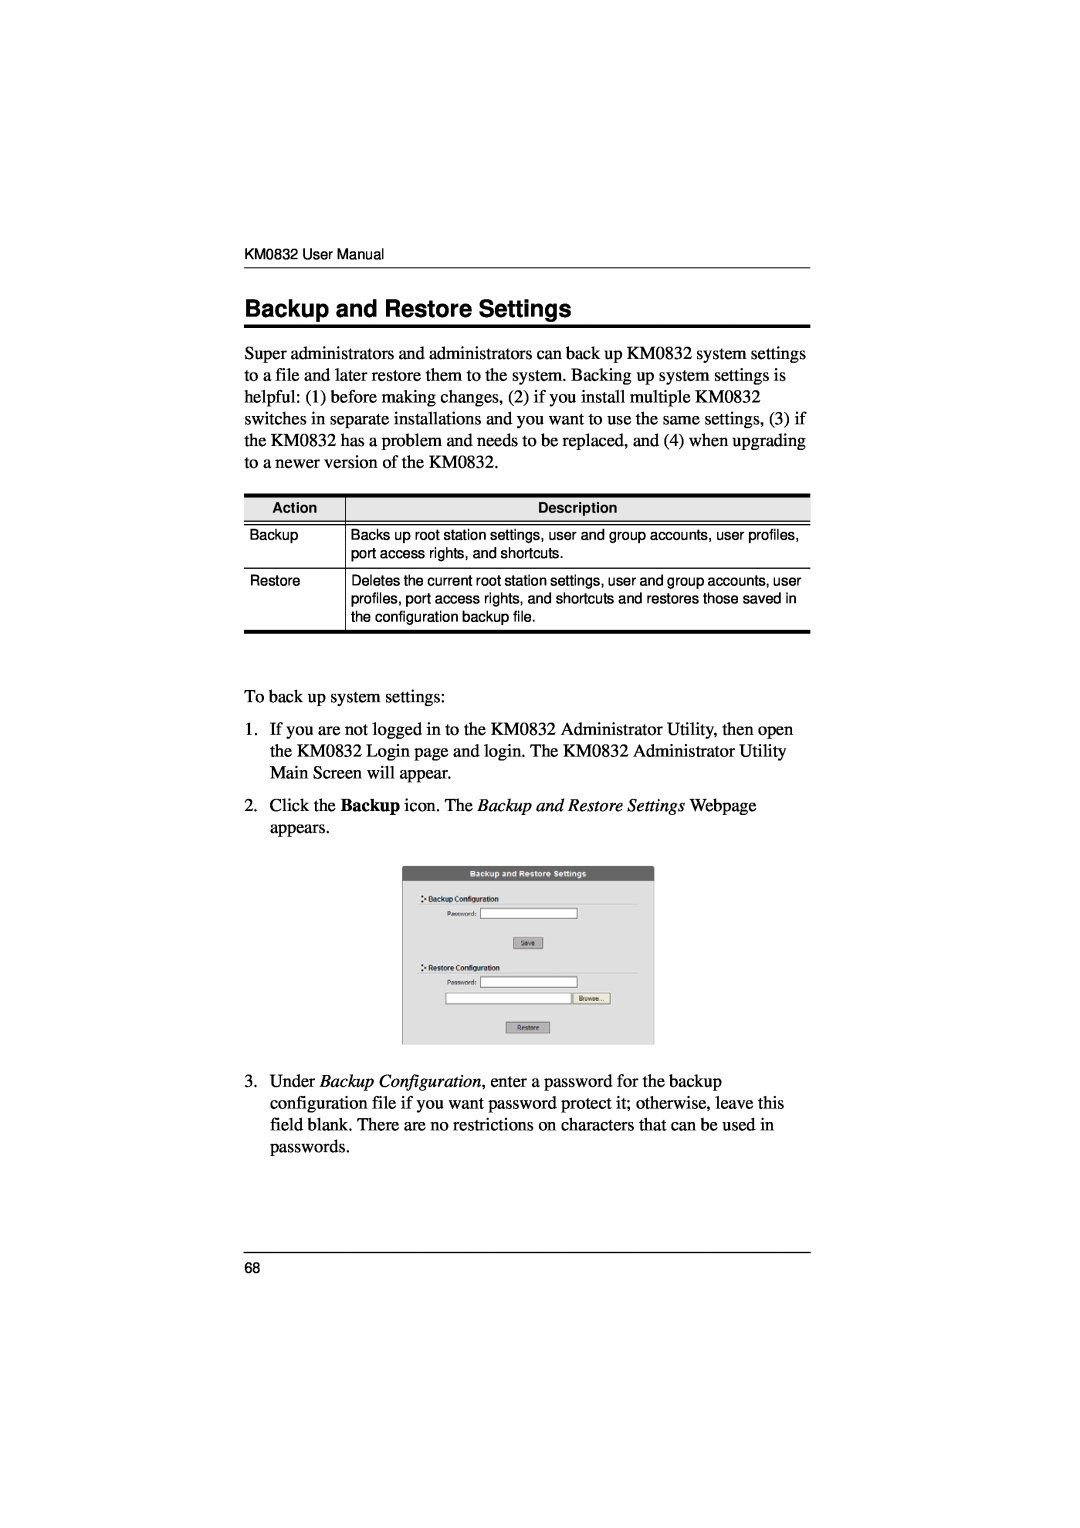 ATEN Technology KM0832 user manual Backup and Restore Settings 